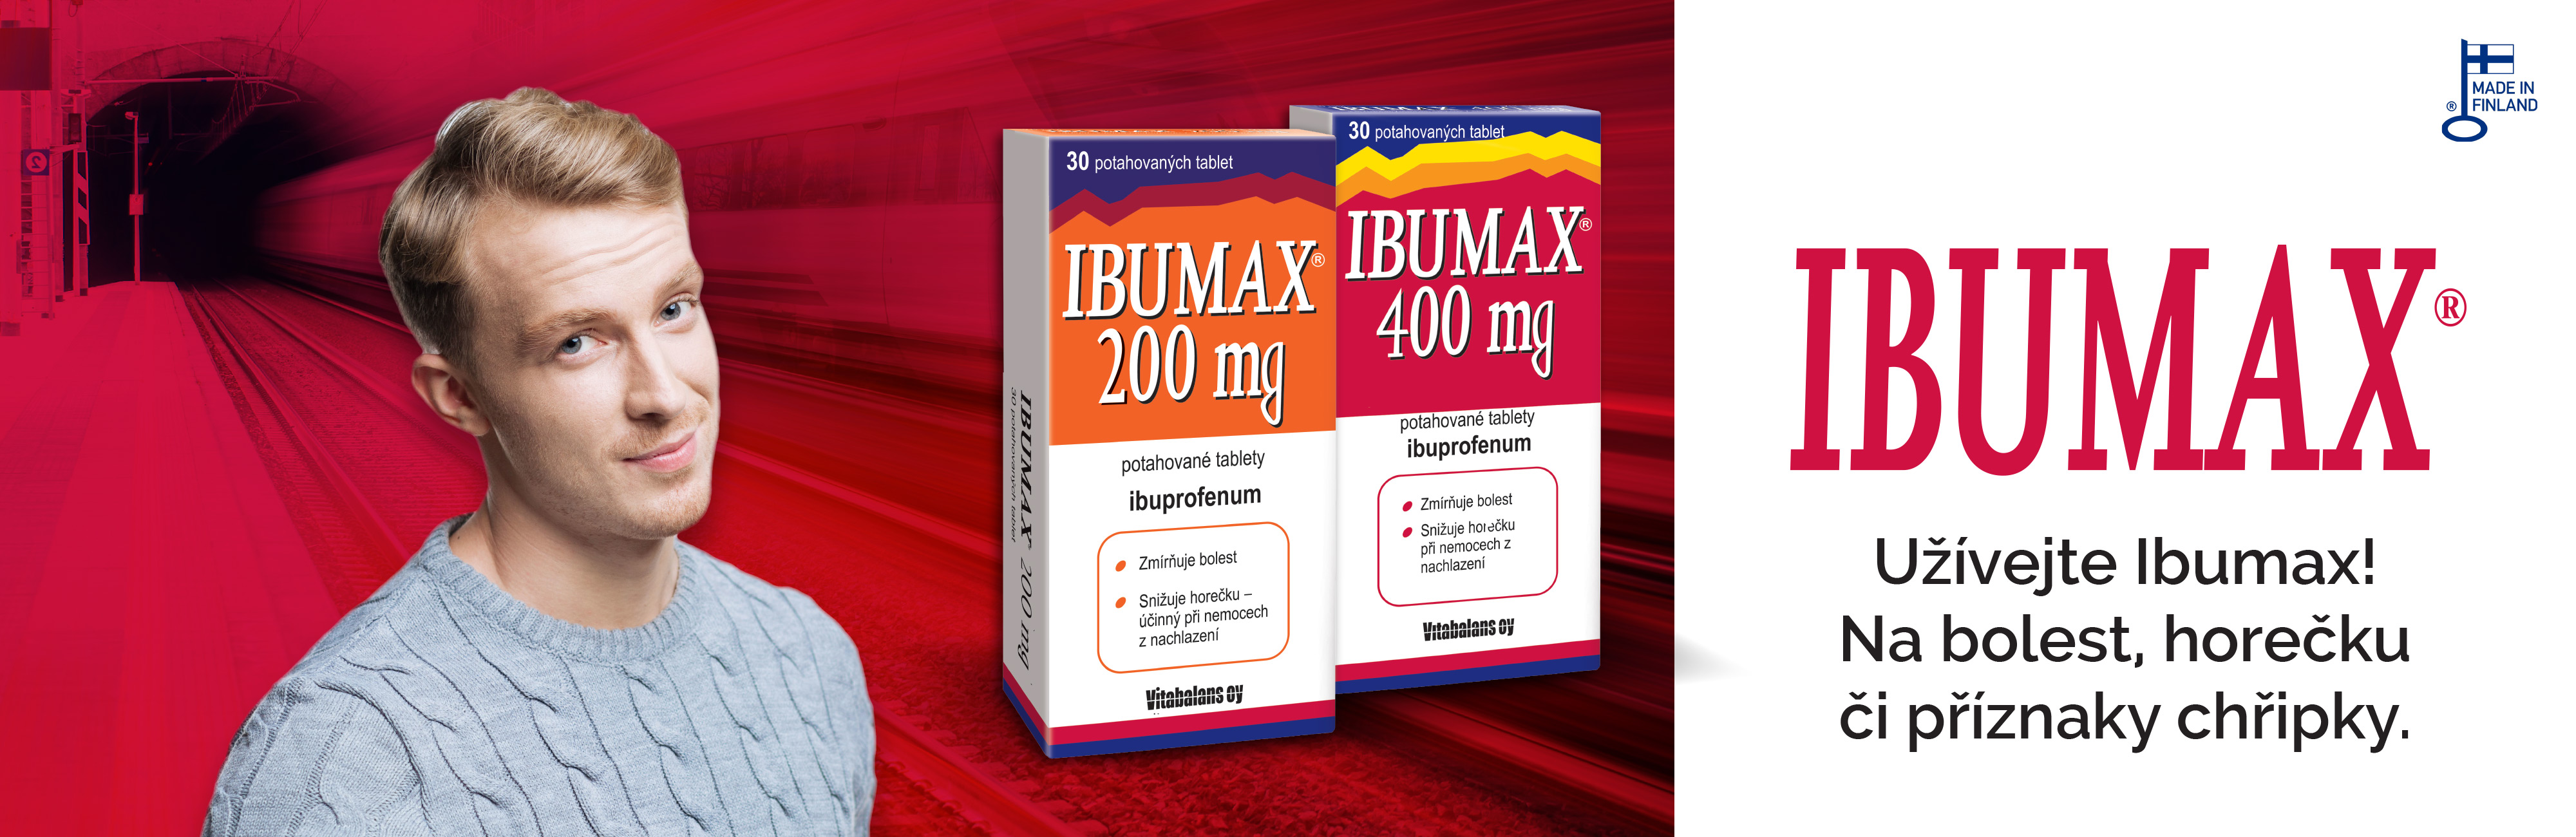 Obrázek IBUMAX 400 mg 30 potahovaných tablet